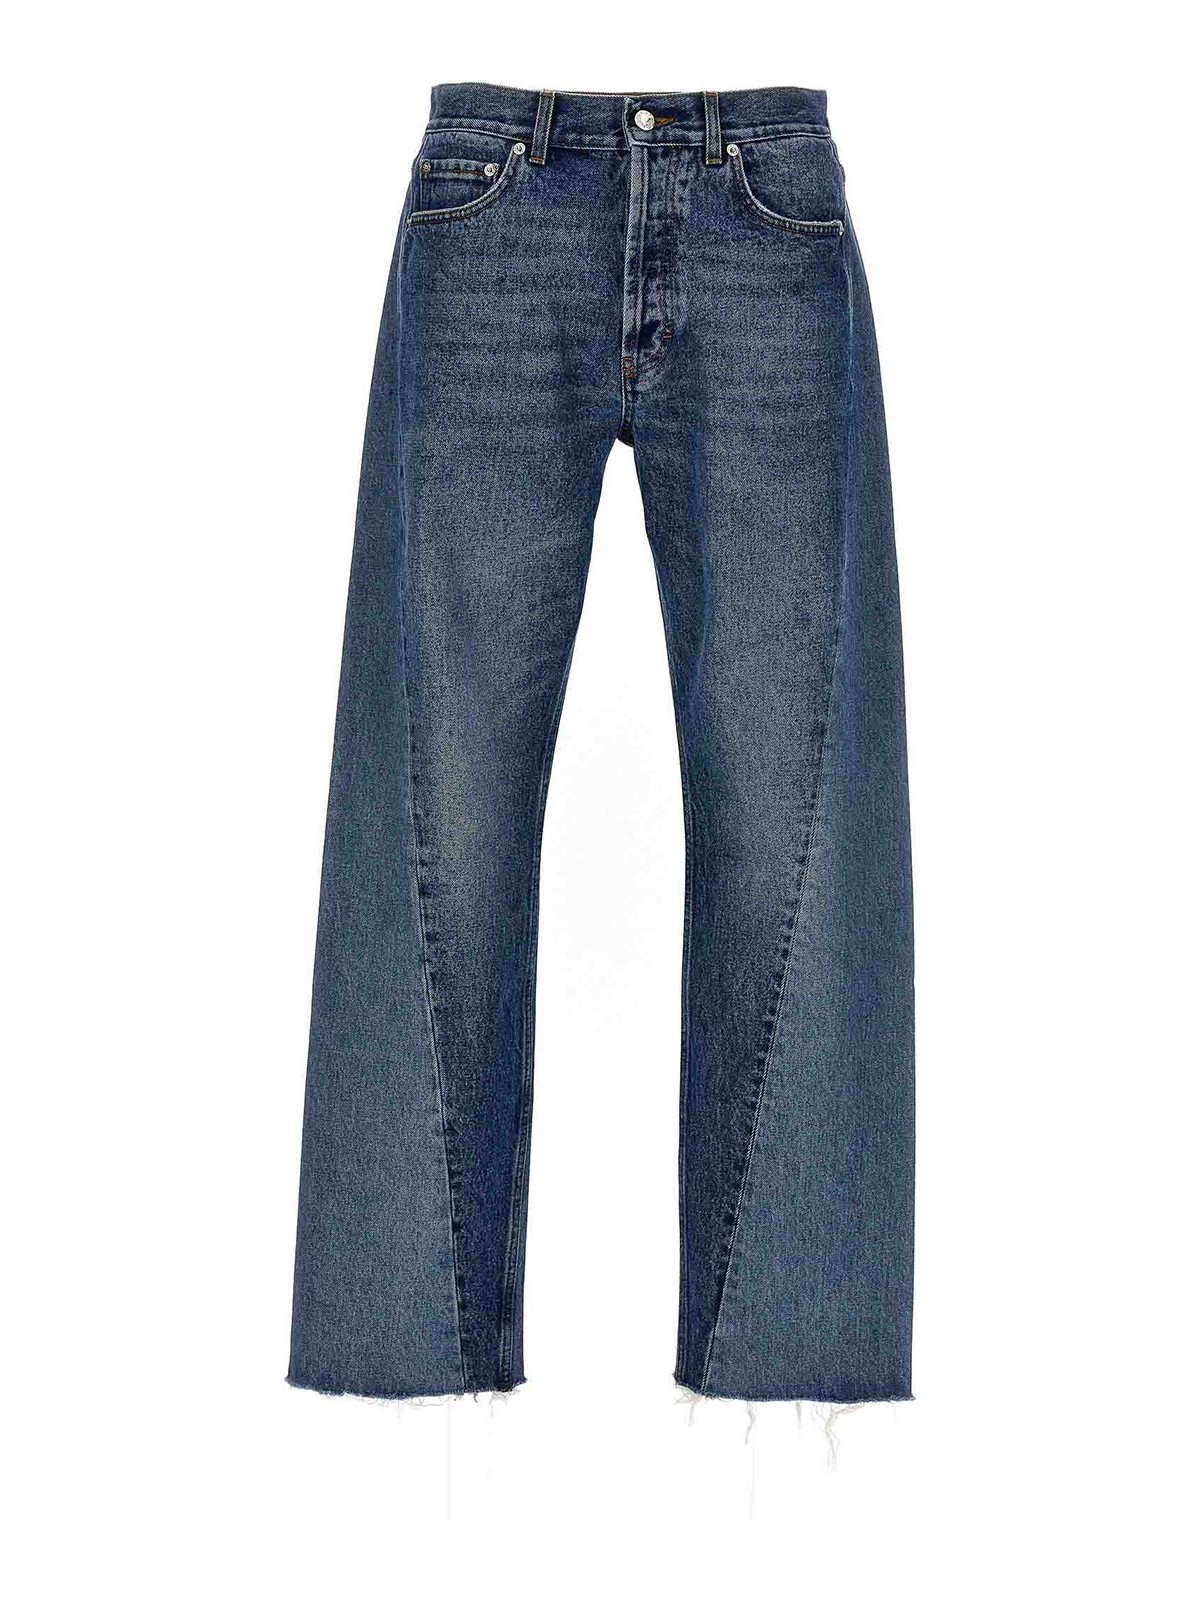 Shop Séfr Twisted Jeans In Blue